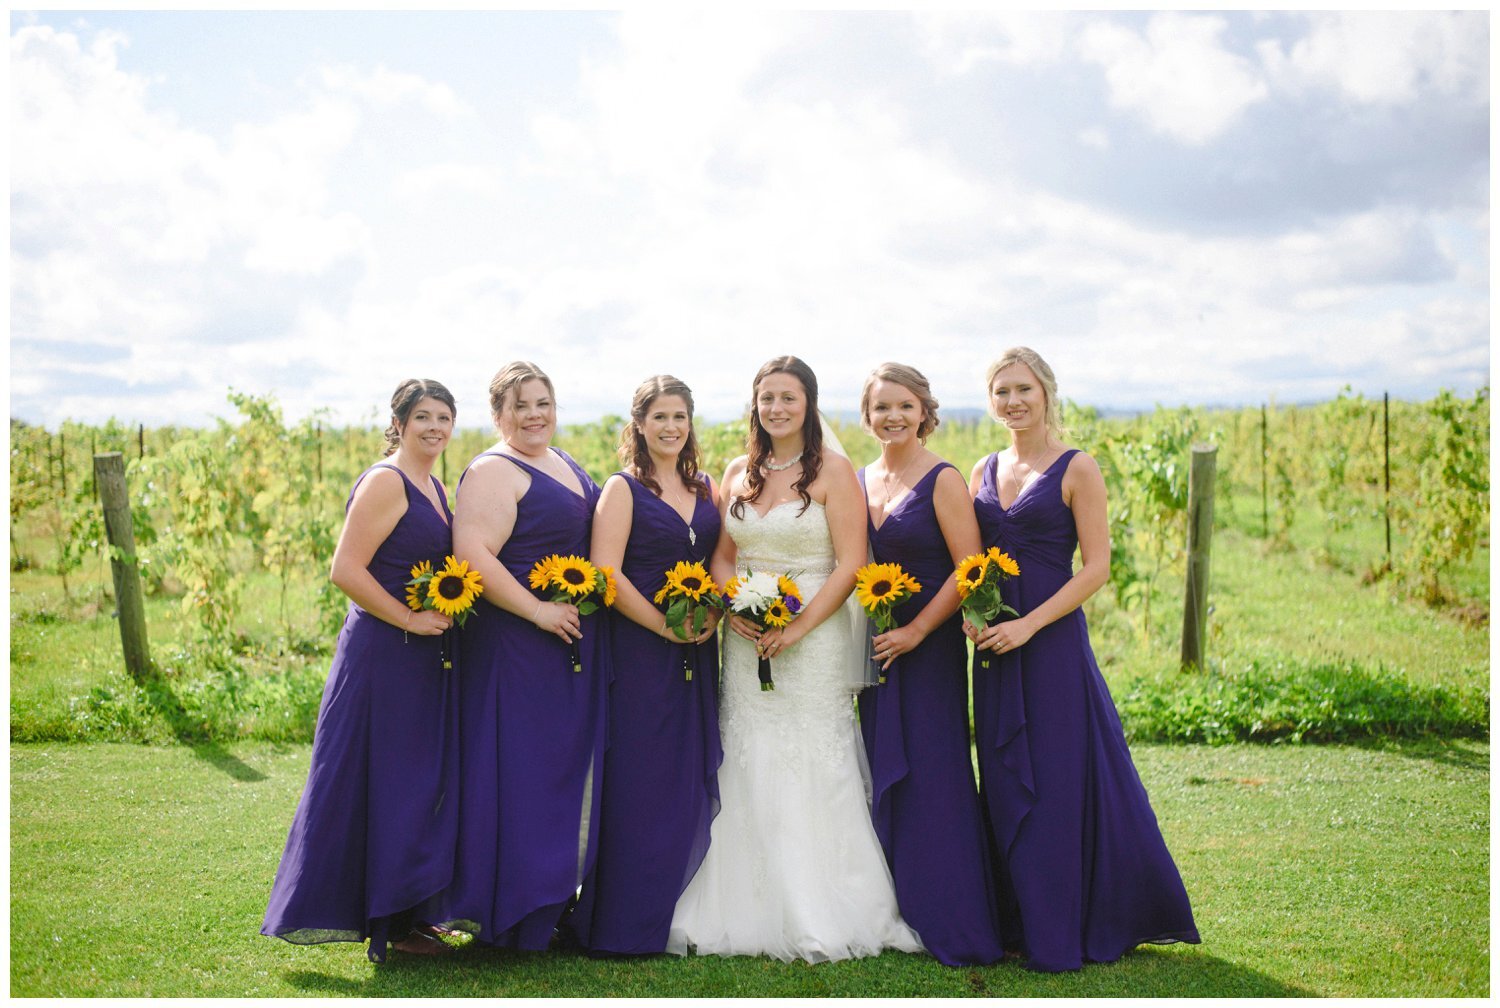 dark purple bridesmaid dresses at Holland Marsh Winery Wedding in Newmarket